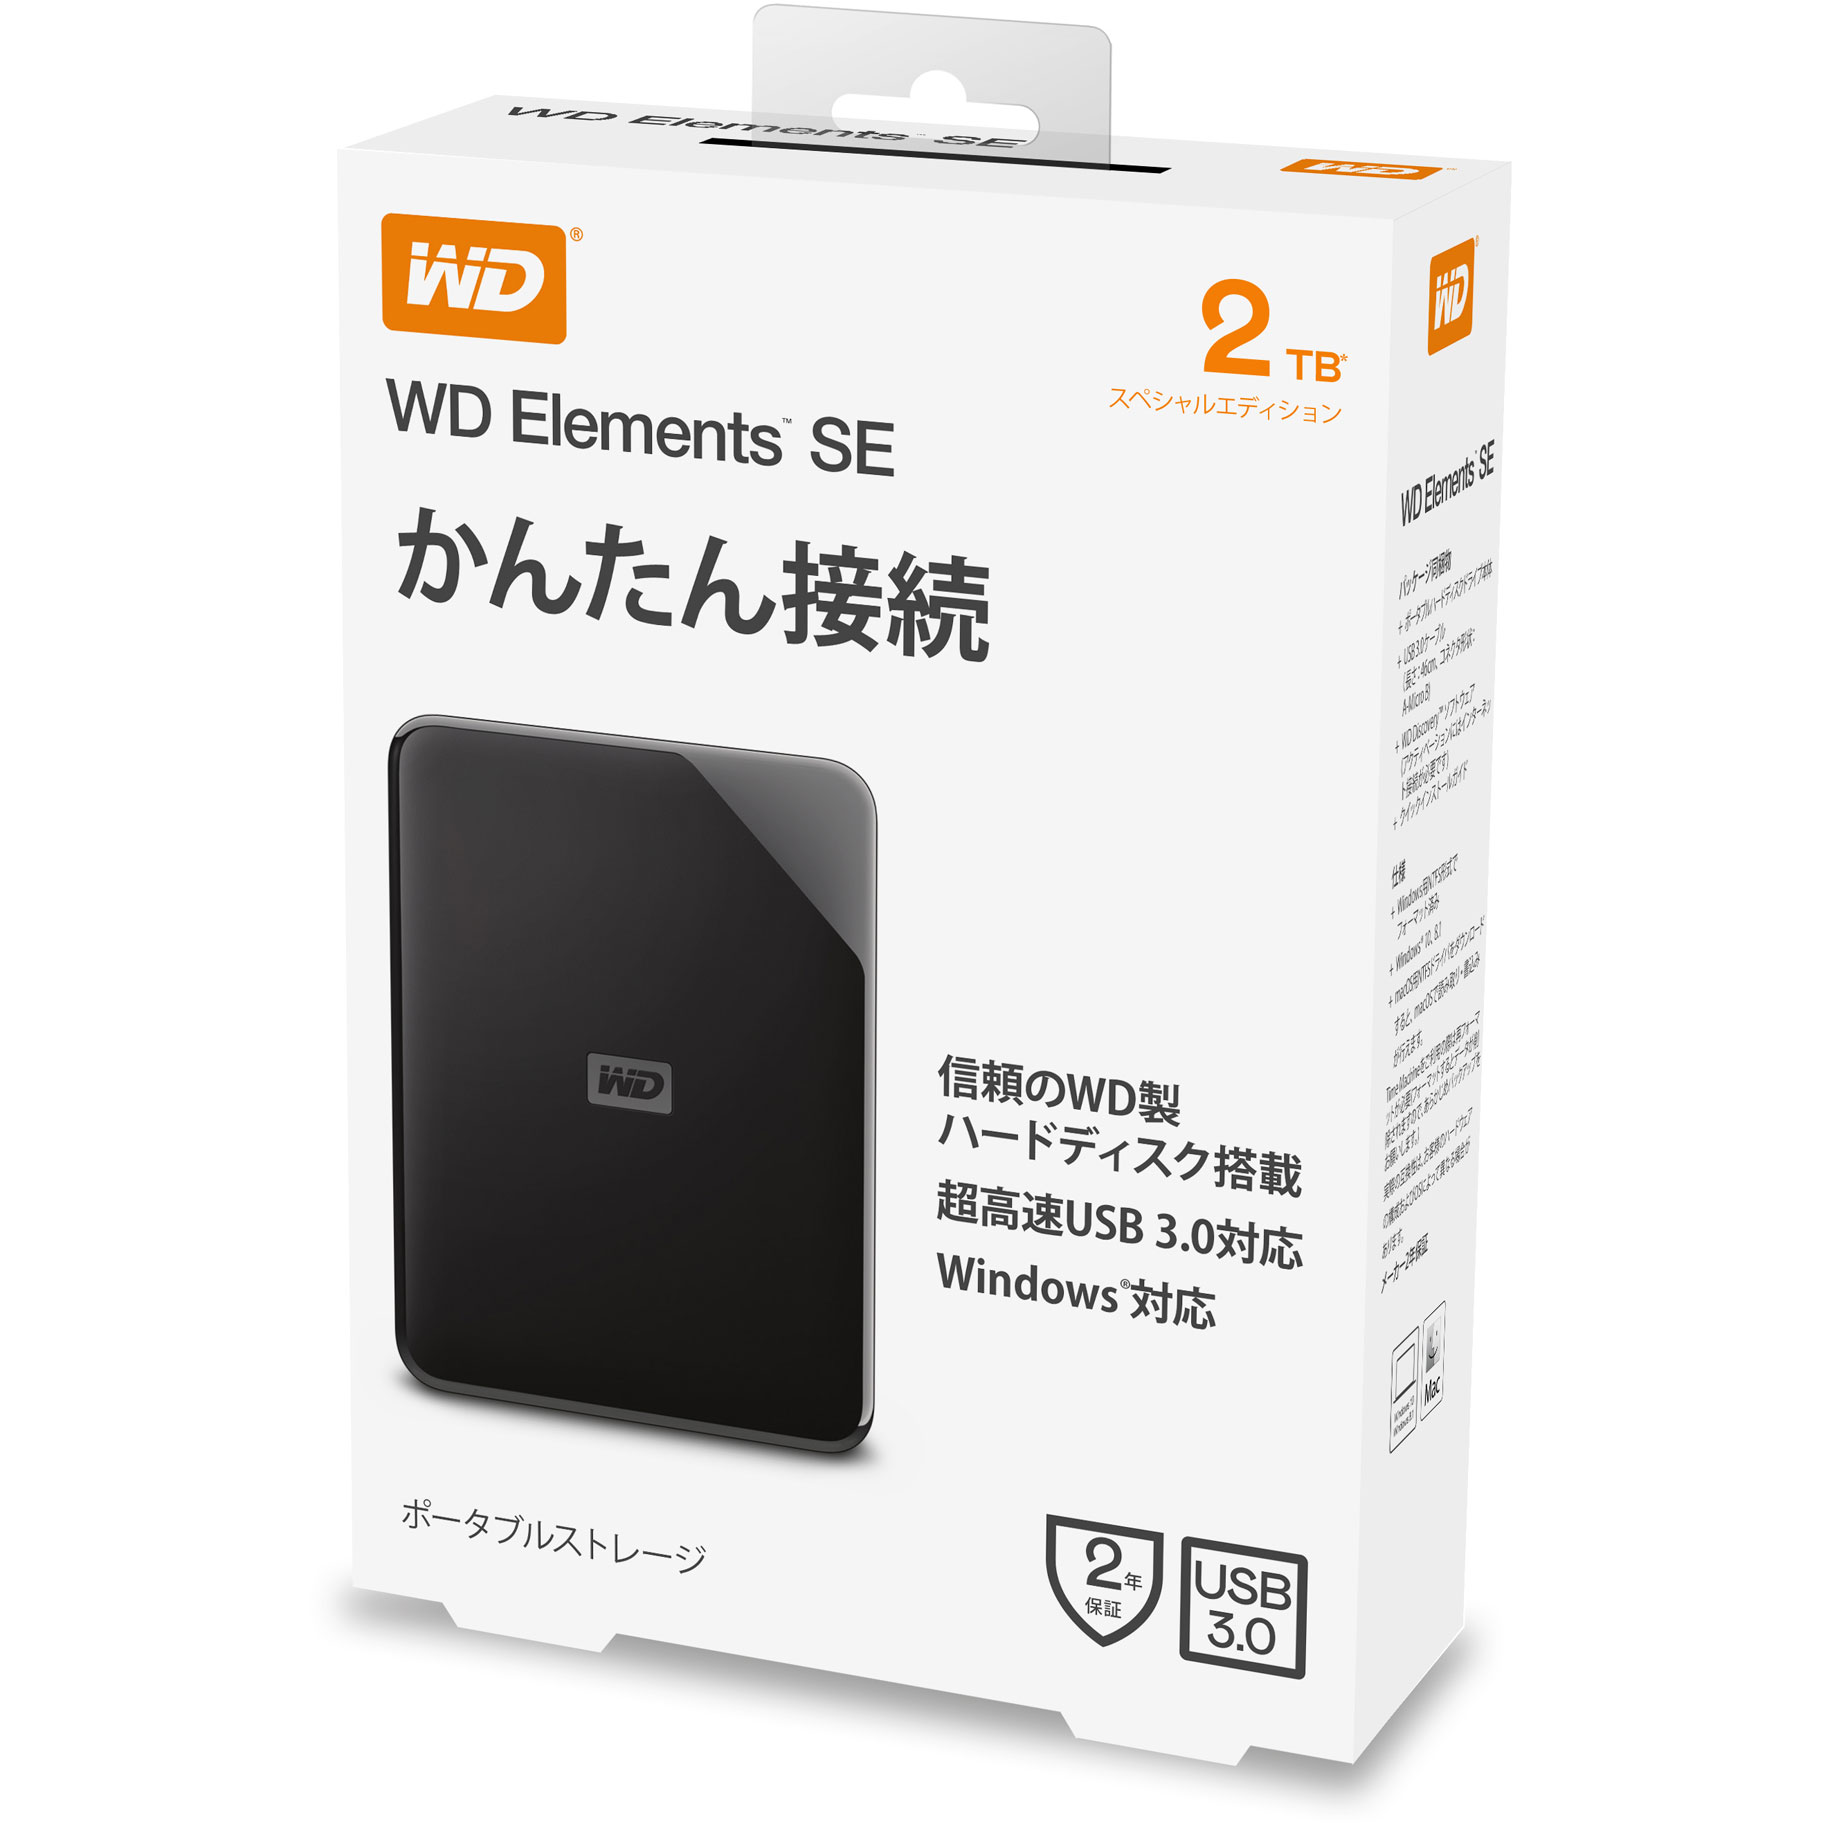 WDBEPK0020BBK-JESE 外付けHDD USB-A接続 WD Elements SE Portable